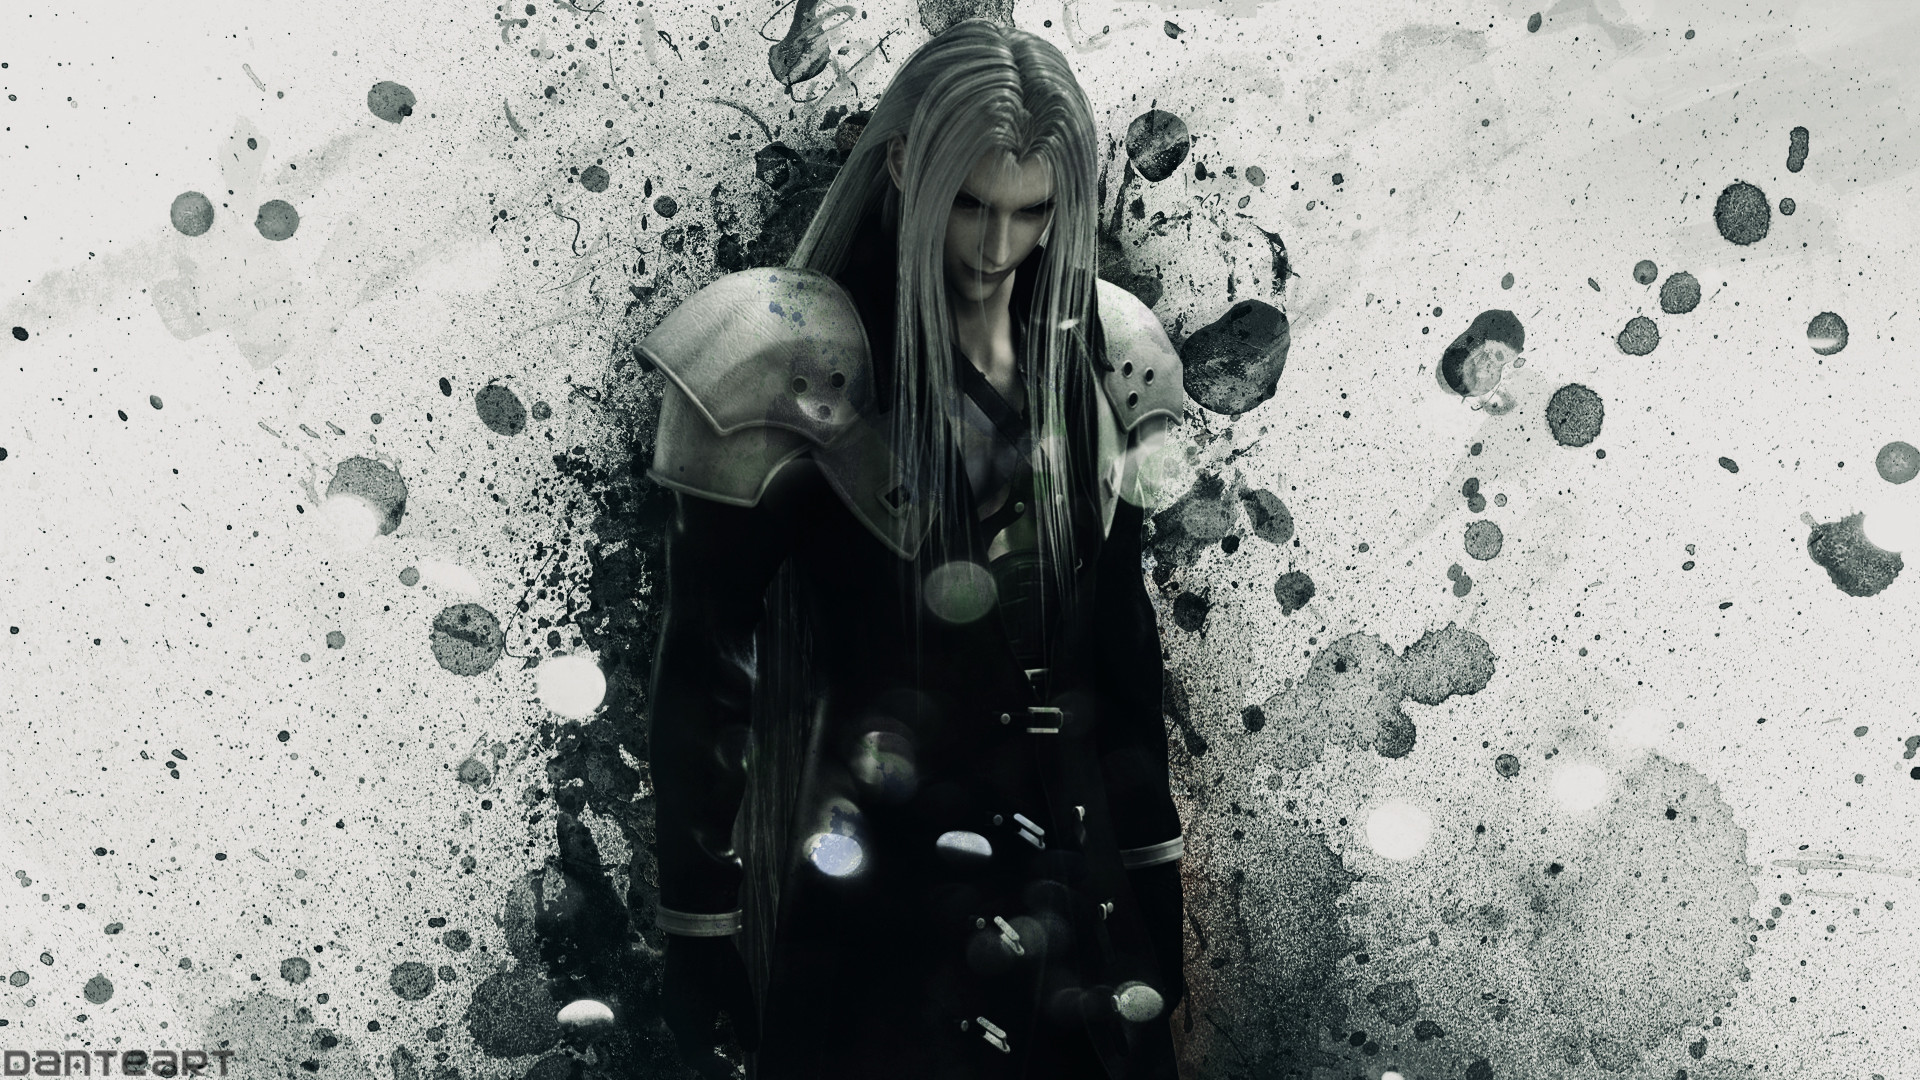 1920x1080 Crisis Core Final Fantasy VII Sephiroth Wallpaper by 